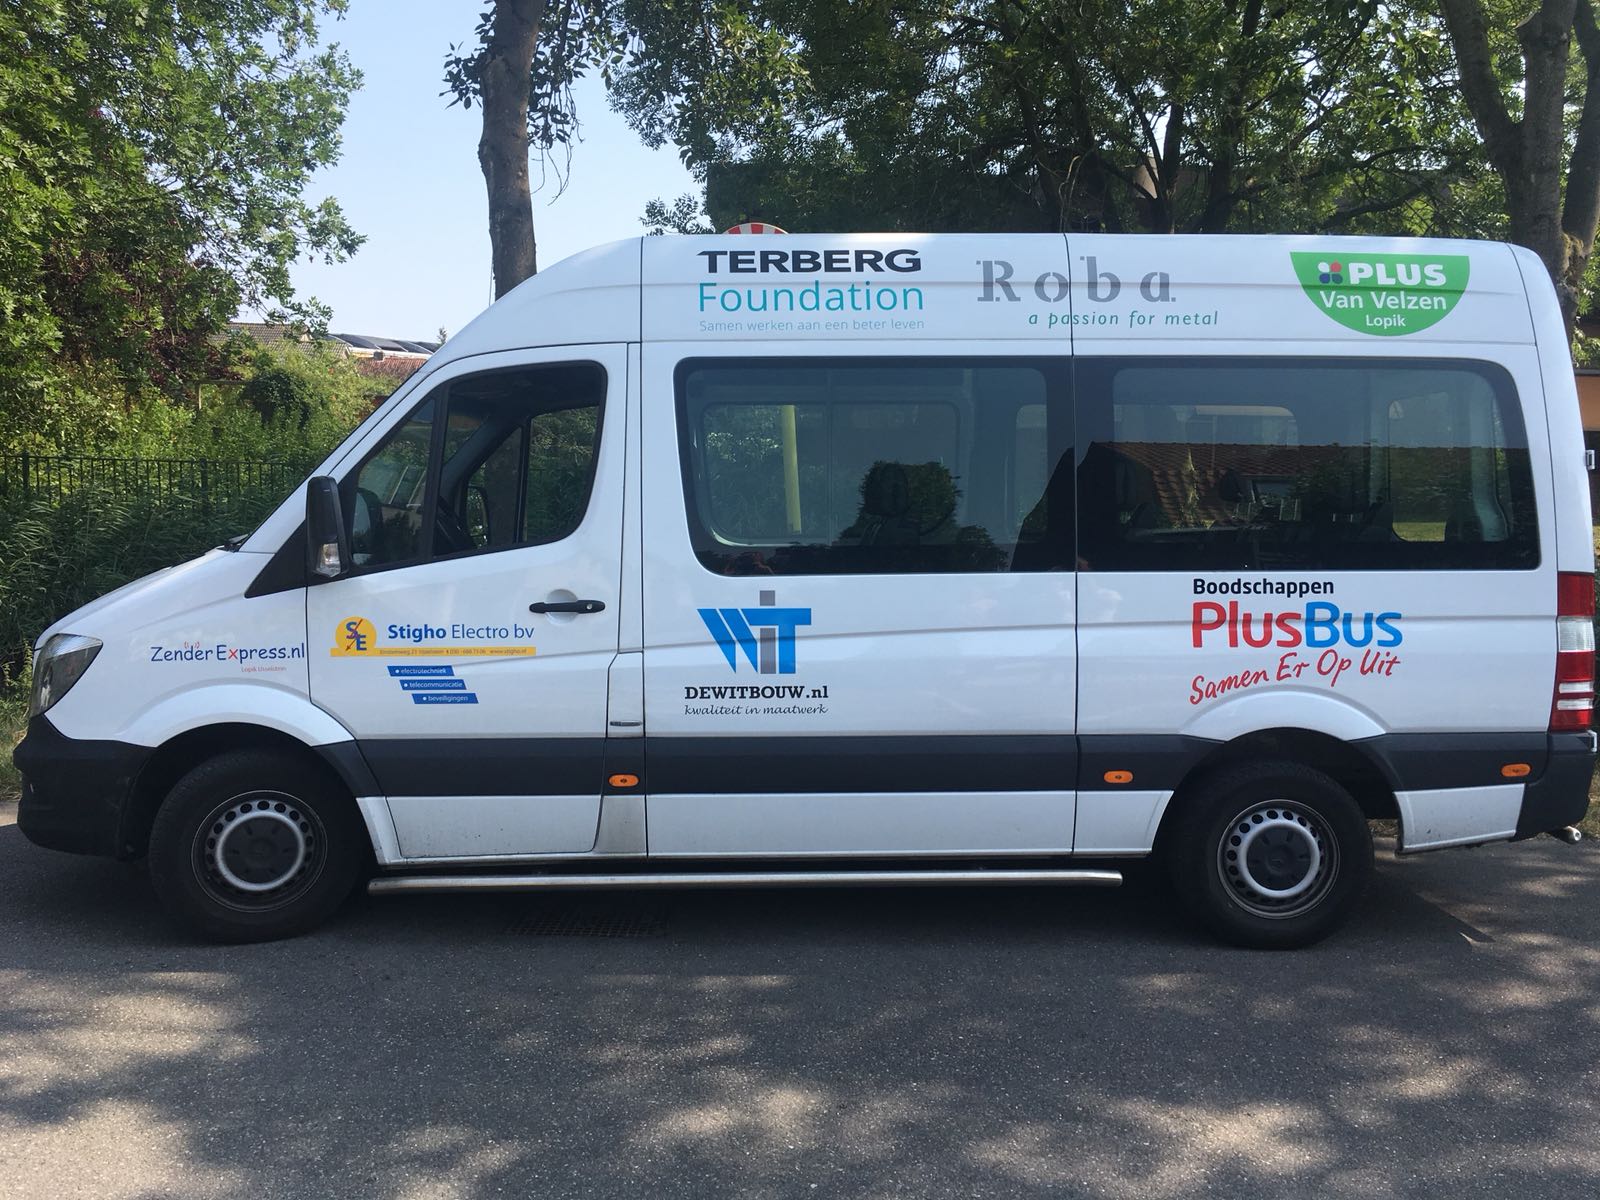 Zender Express bus sponsoring Terberg Foundation 2018